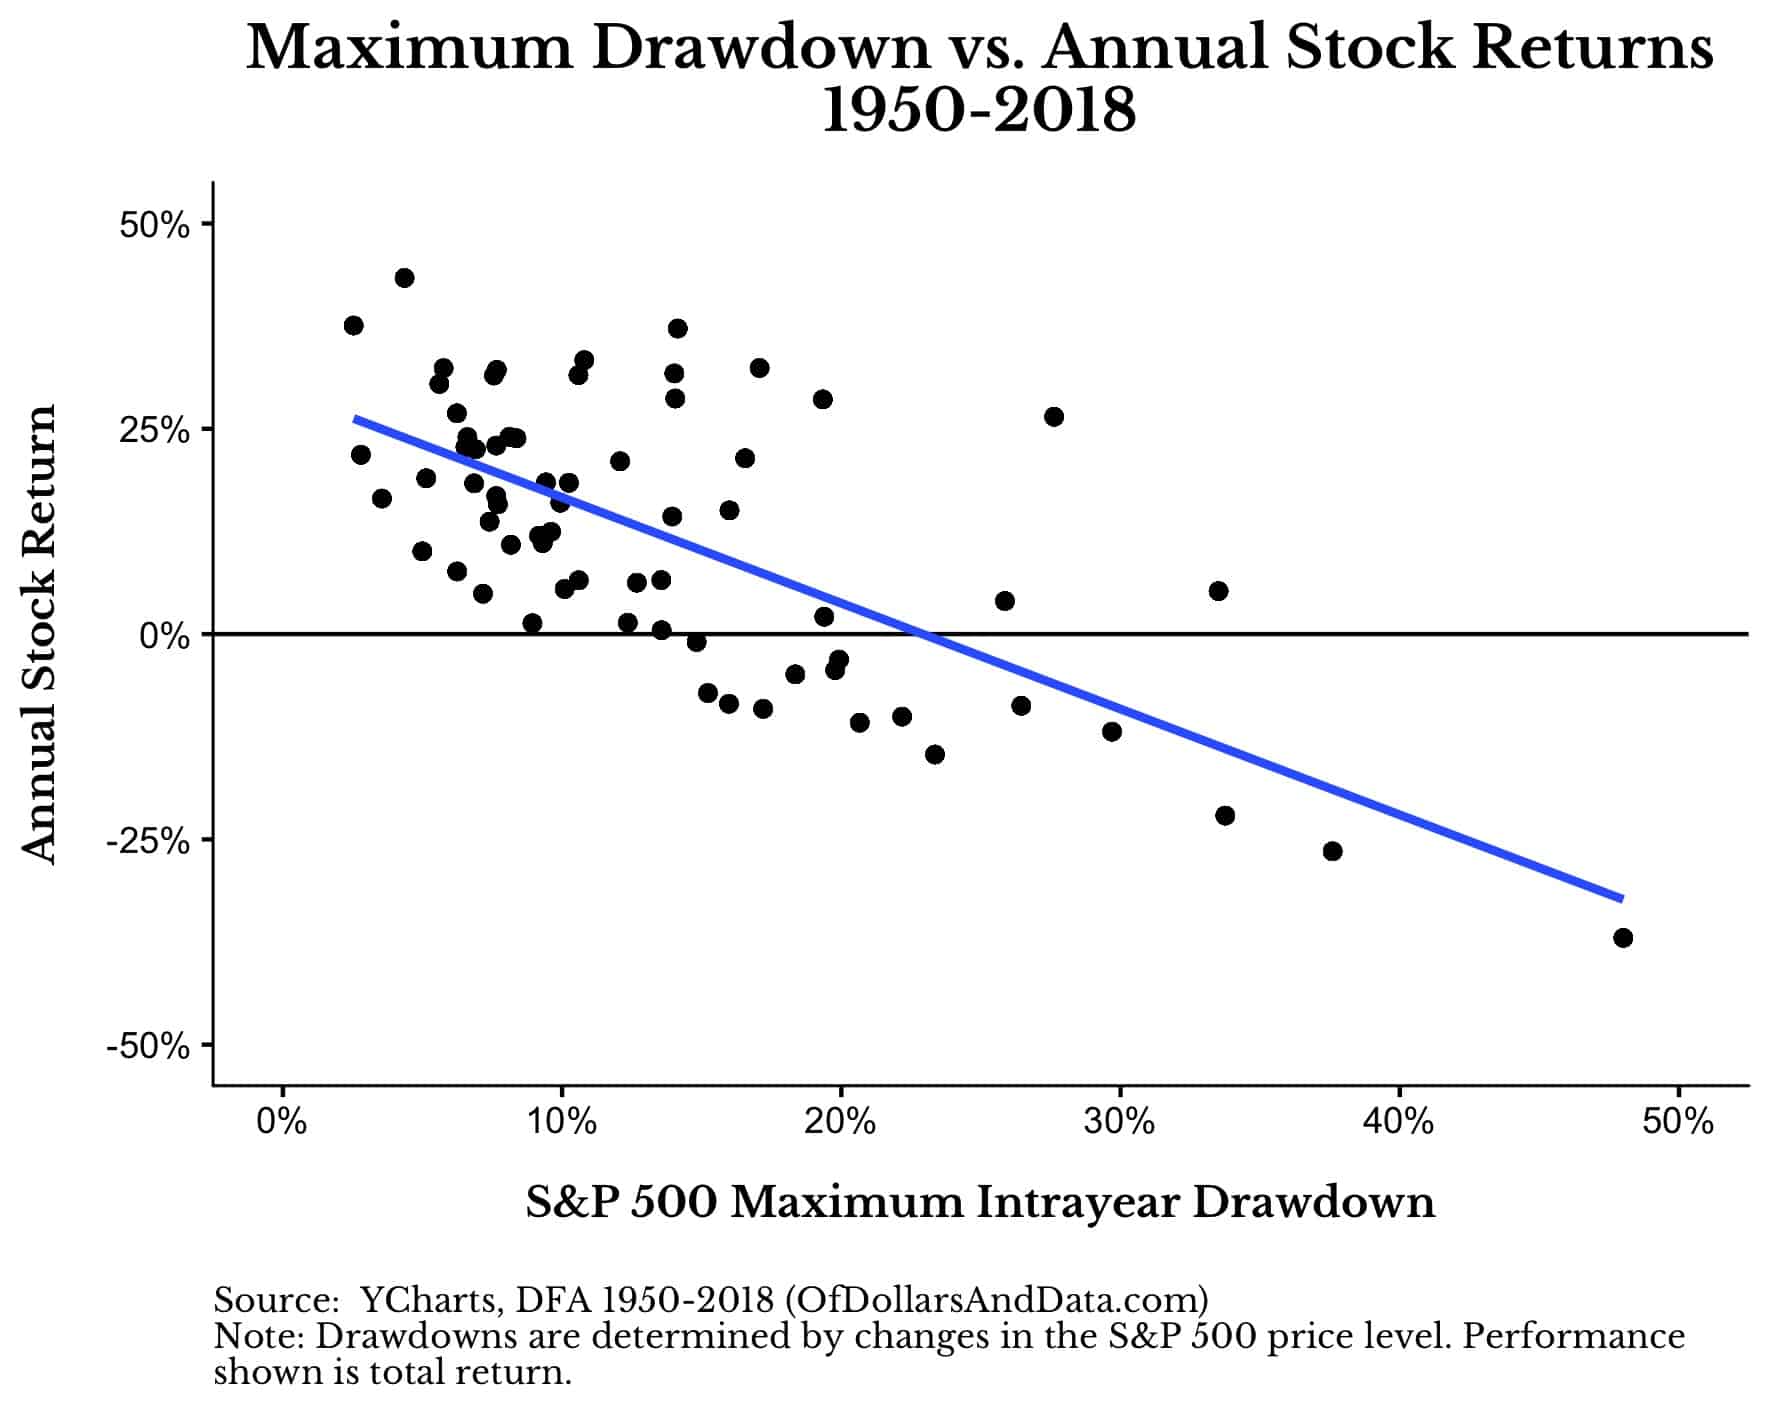 maximum intrayear s&p 500 drawdowns plotted against annual stock returns